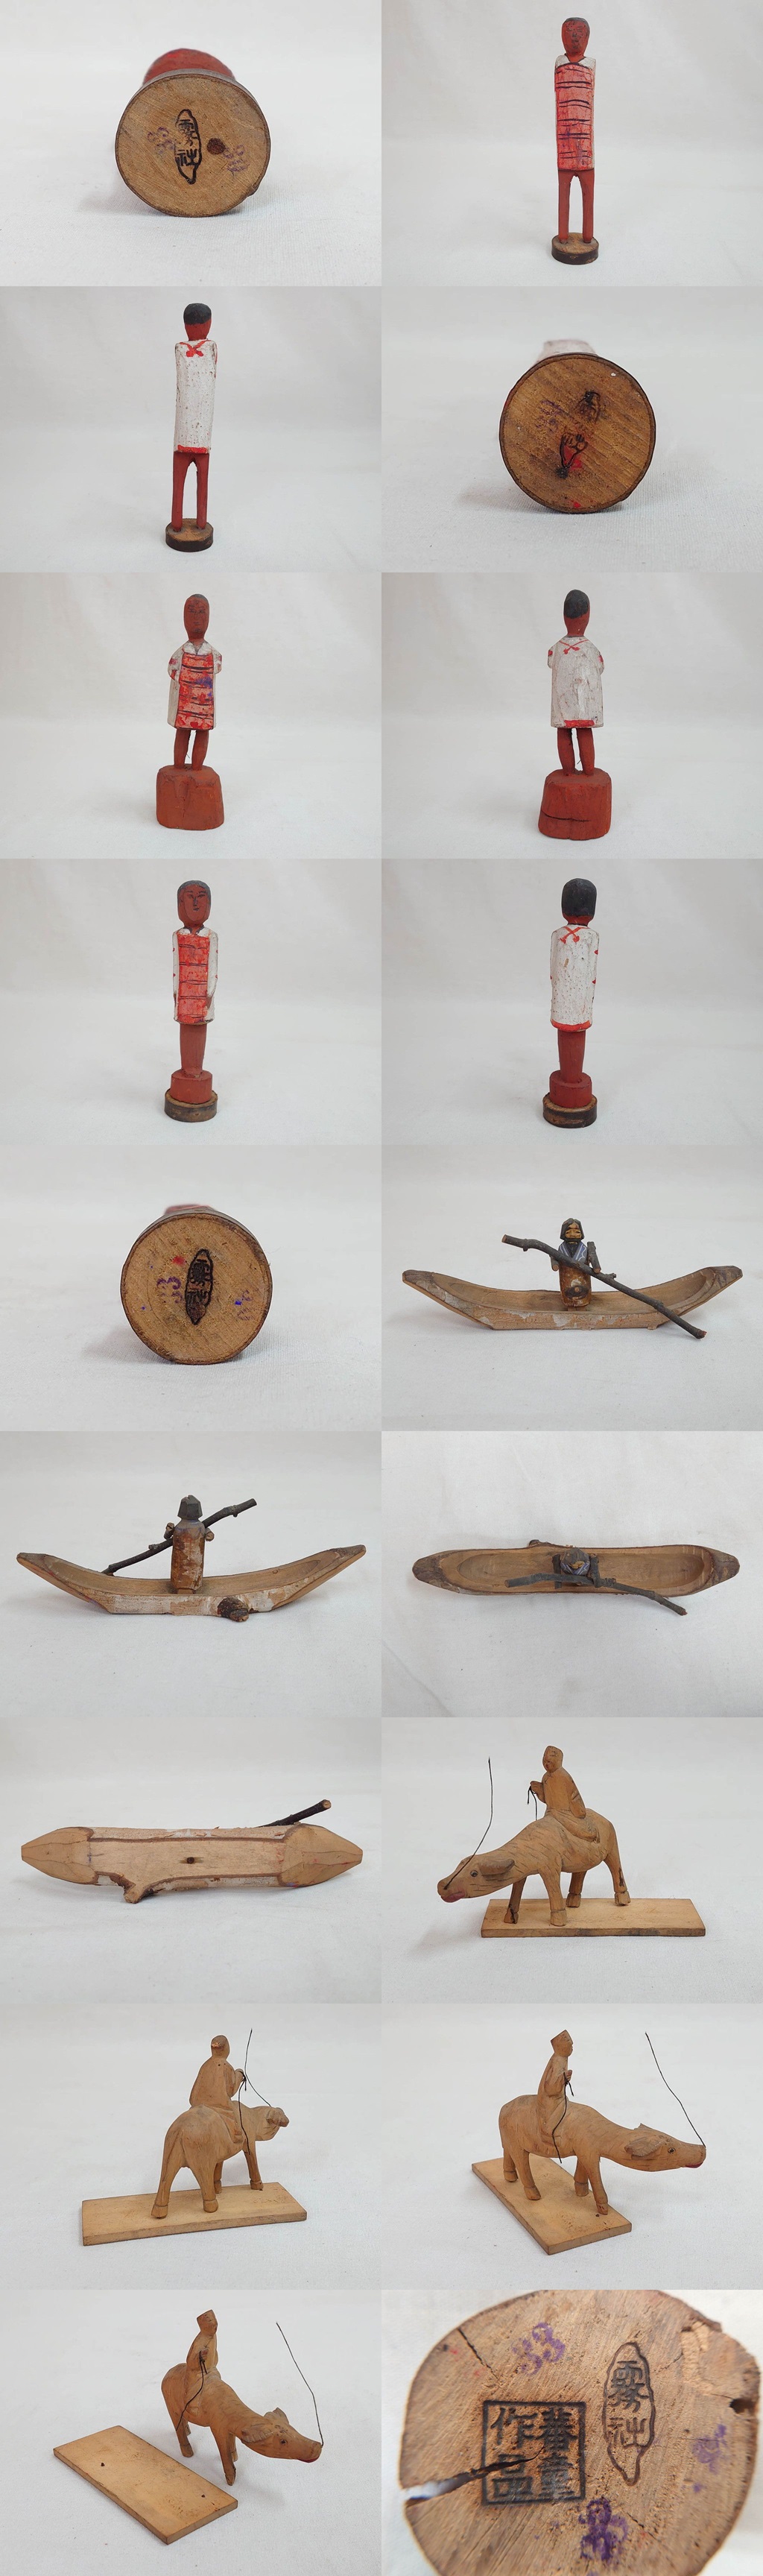 R-073370 台湾？ 霧社蕃童作品木彫り人形など12体セット(アイヌ、木製 